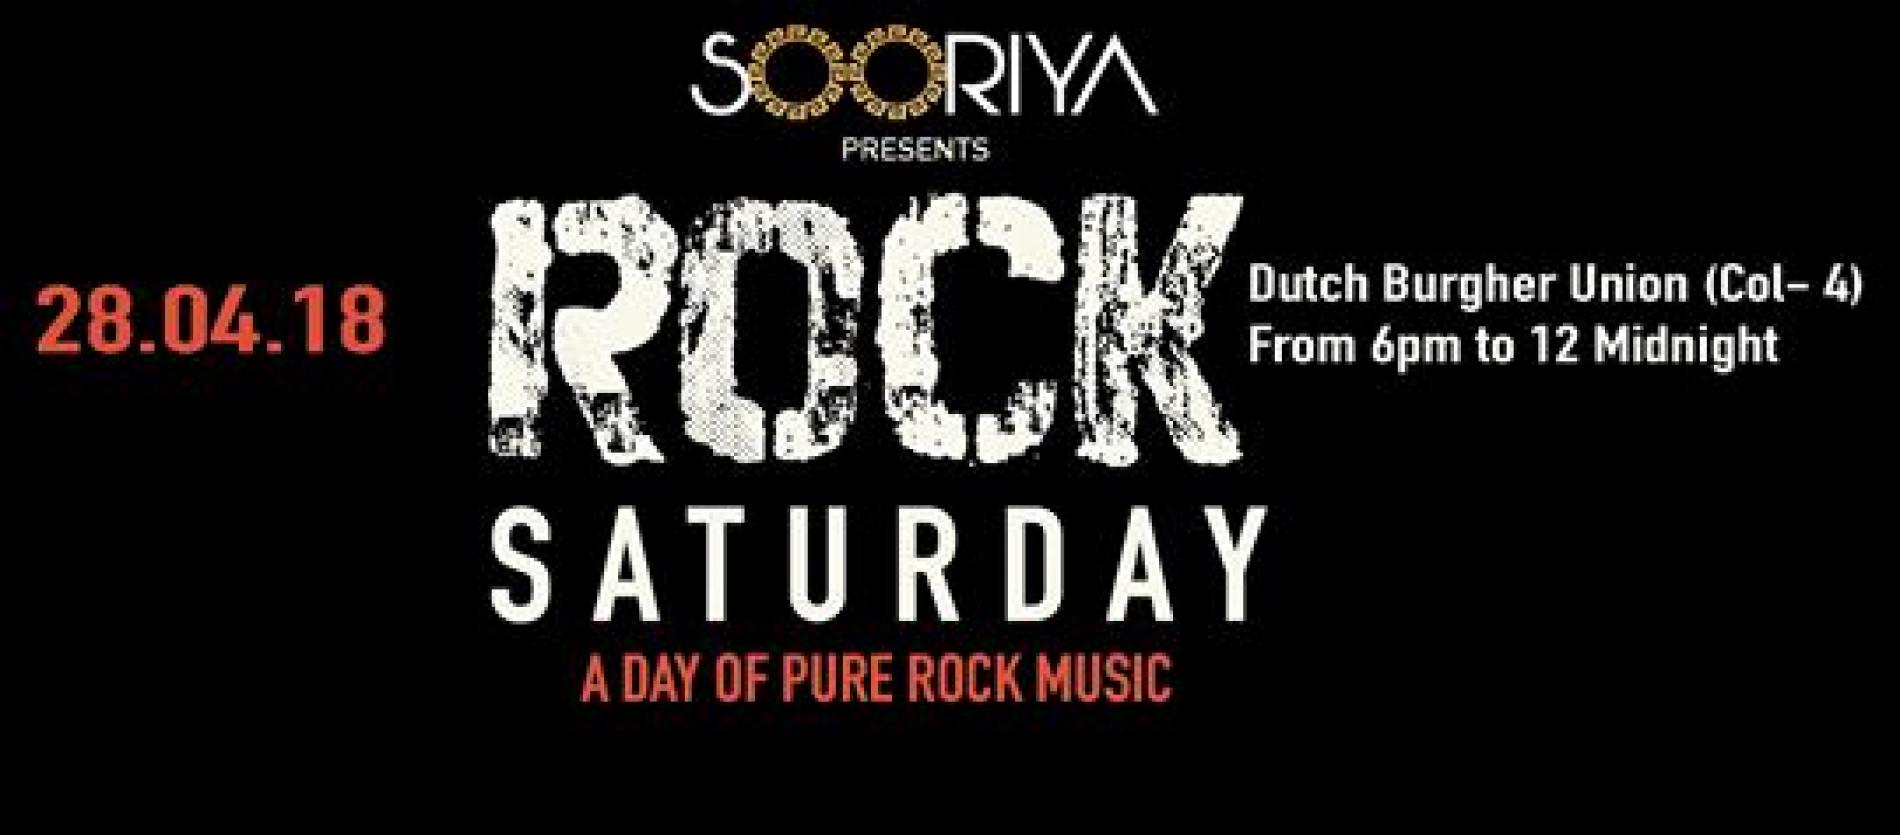 Rock Saturday Is On This Weekend!